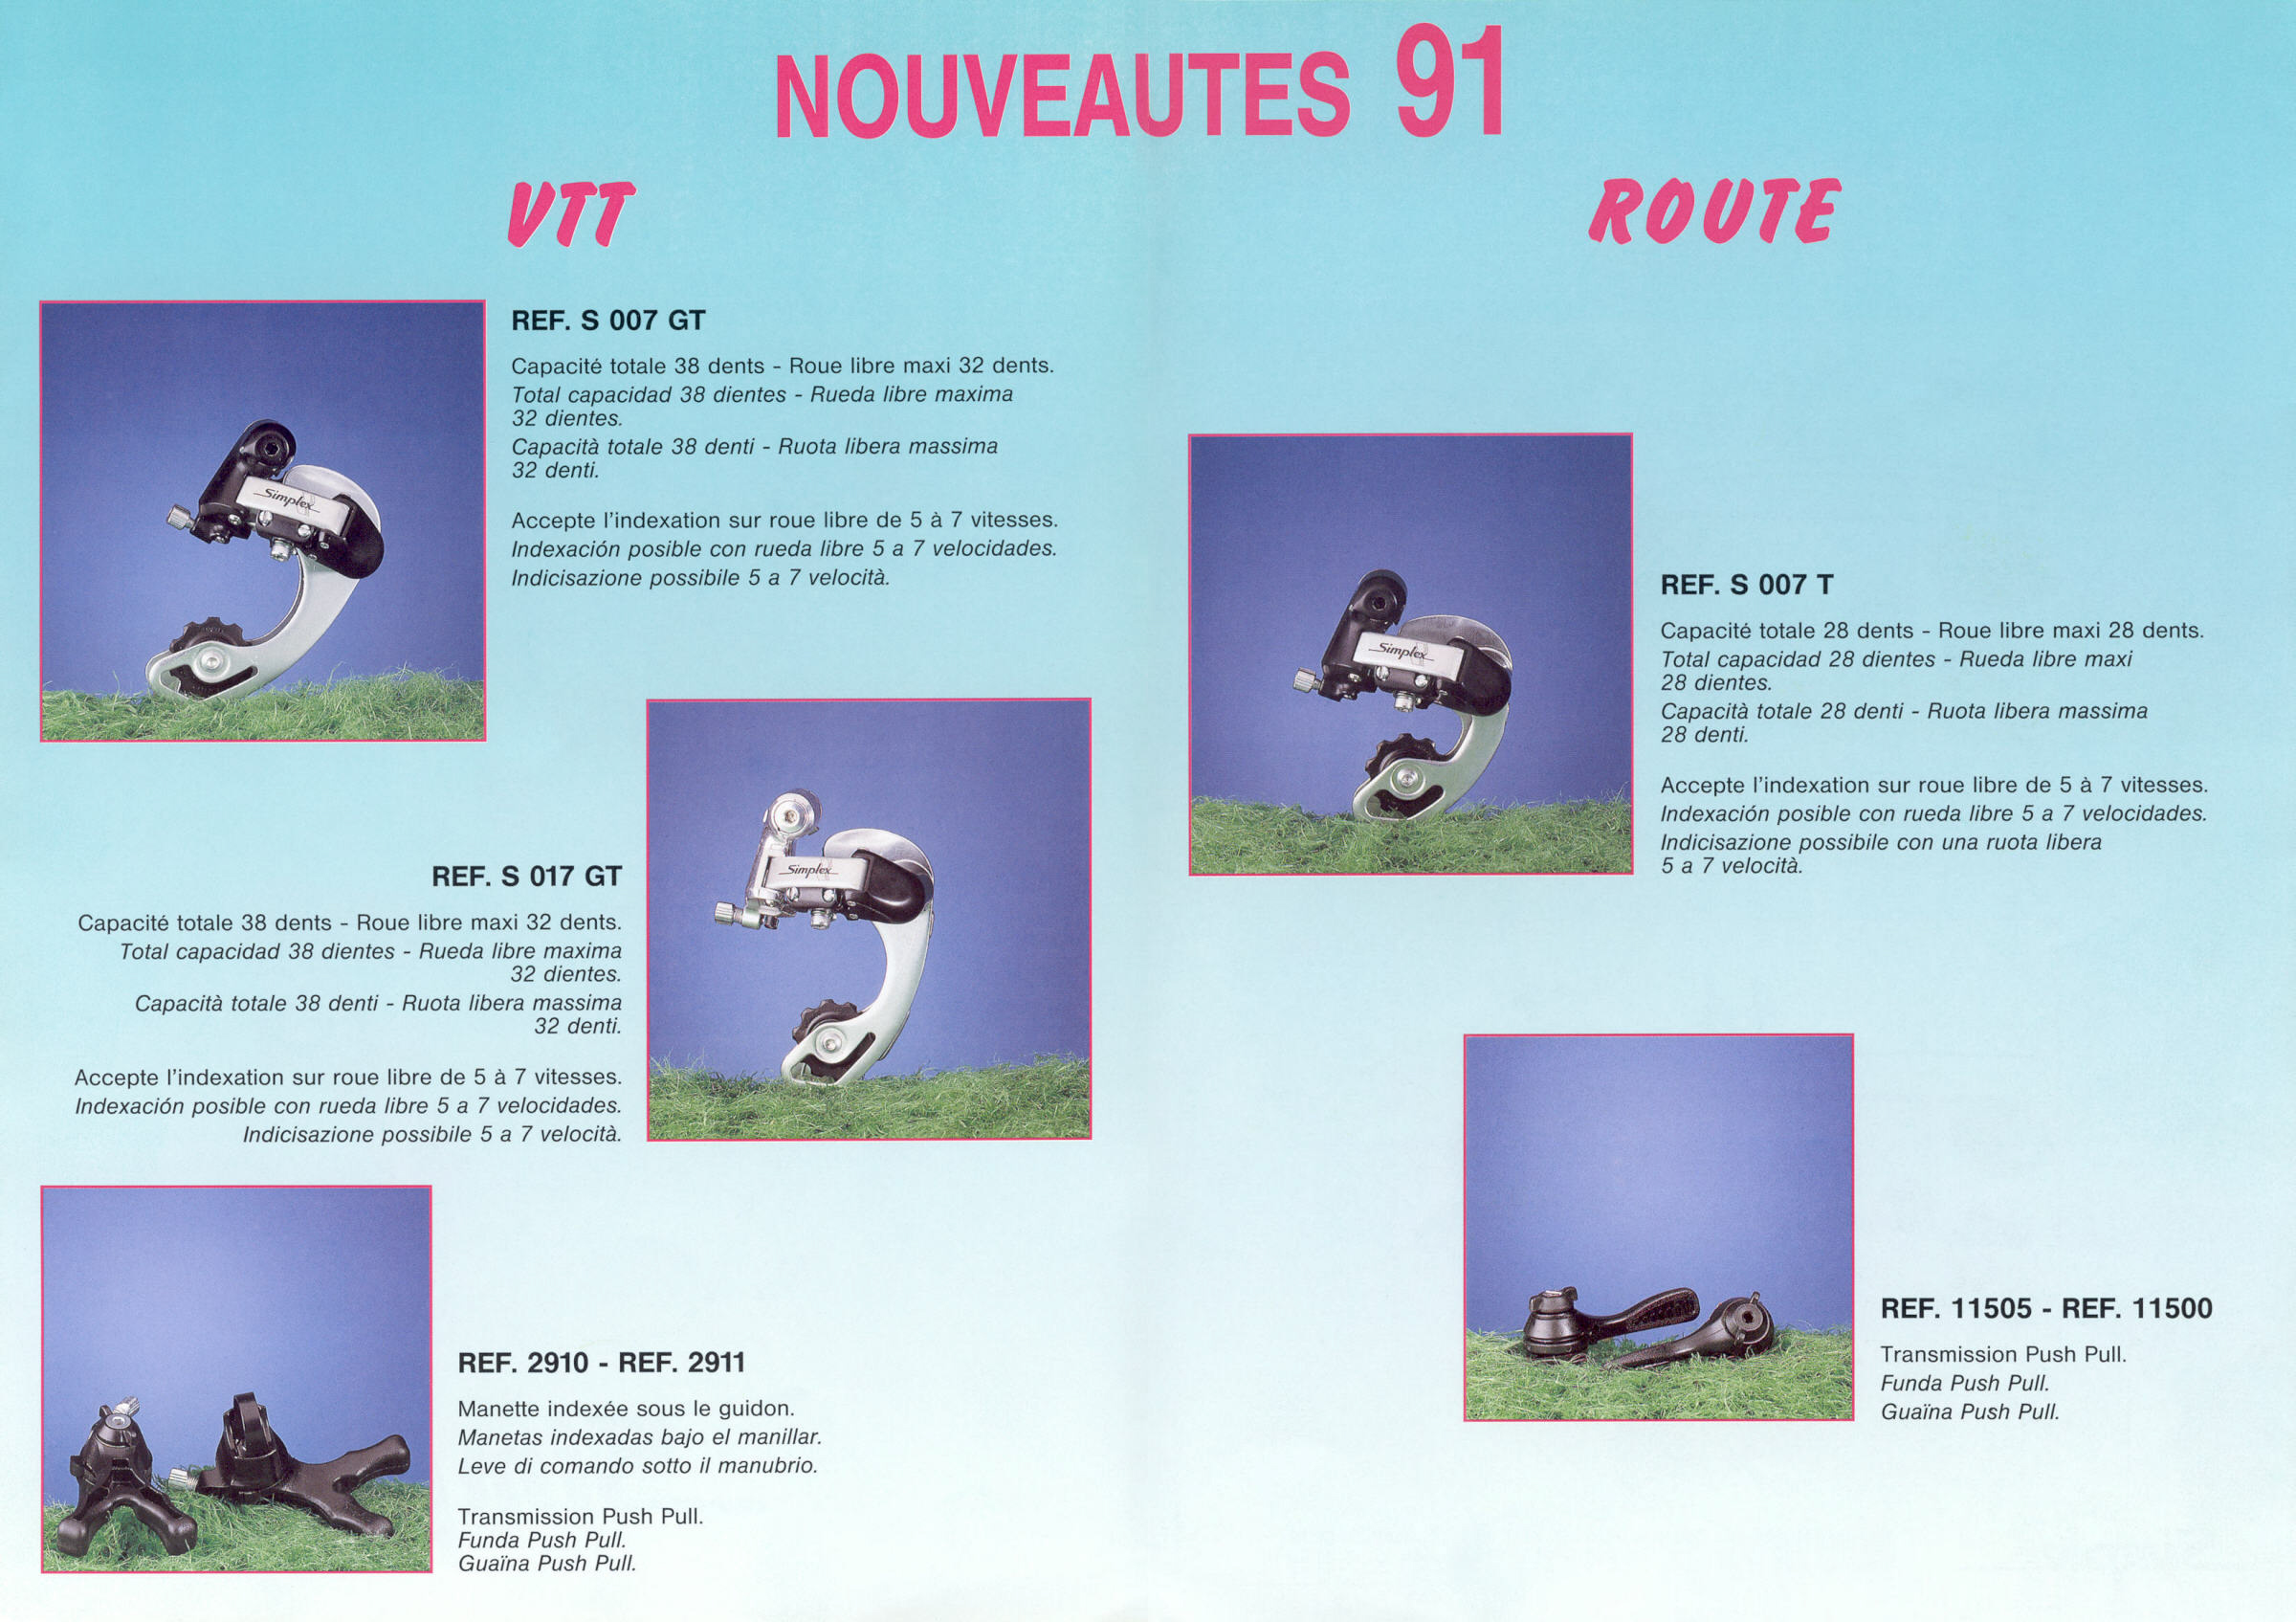 Simplex brochure (1991)